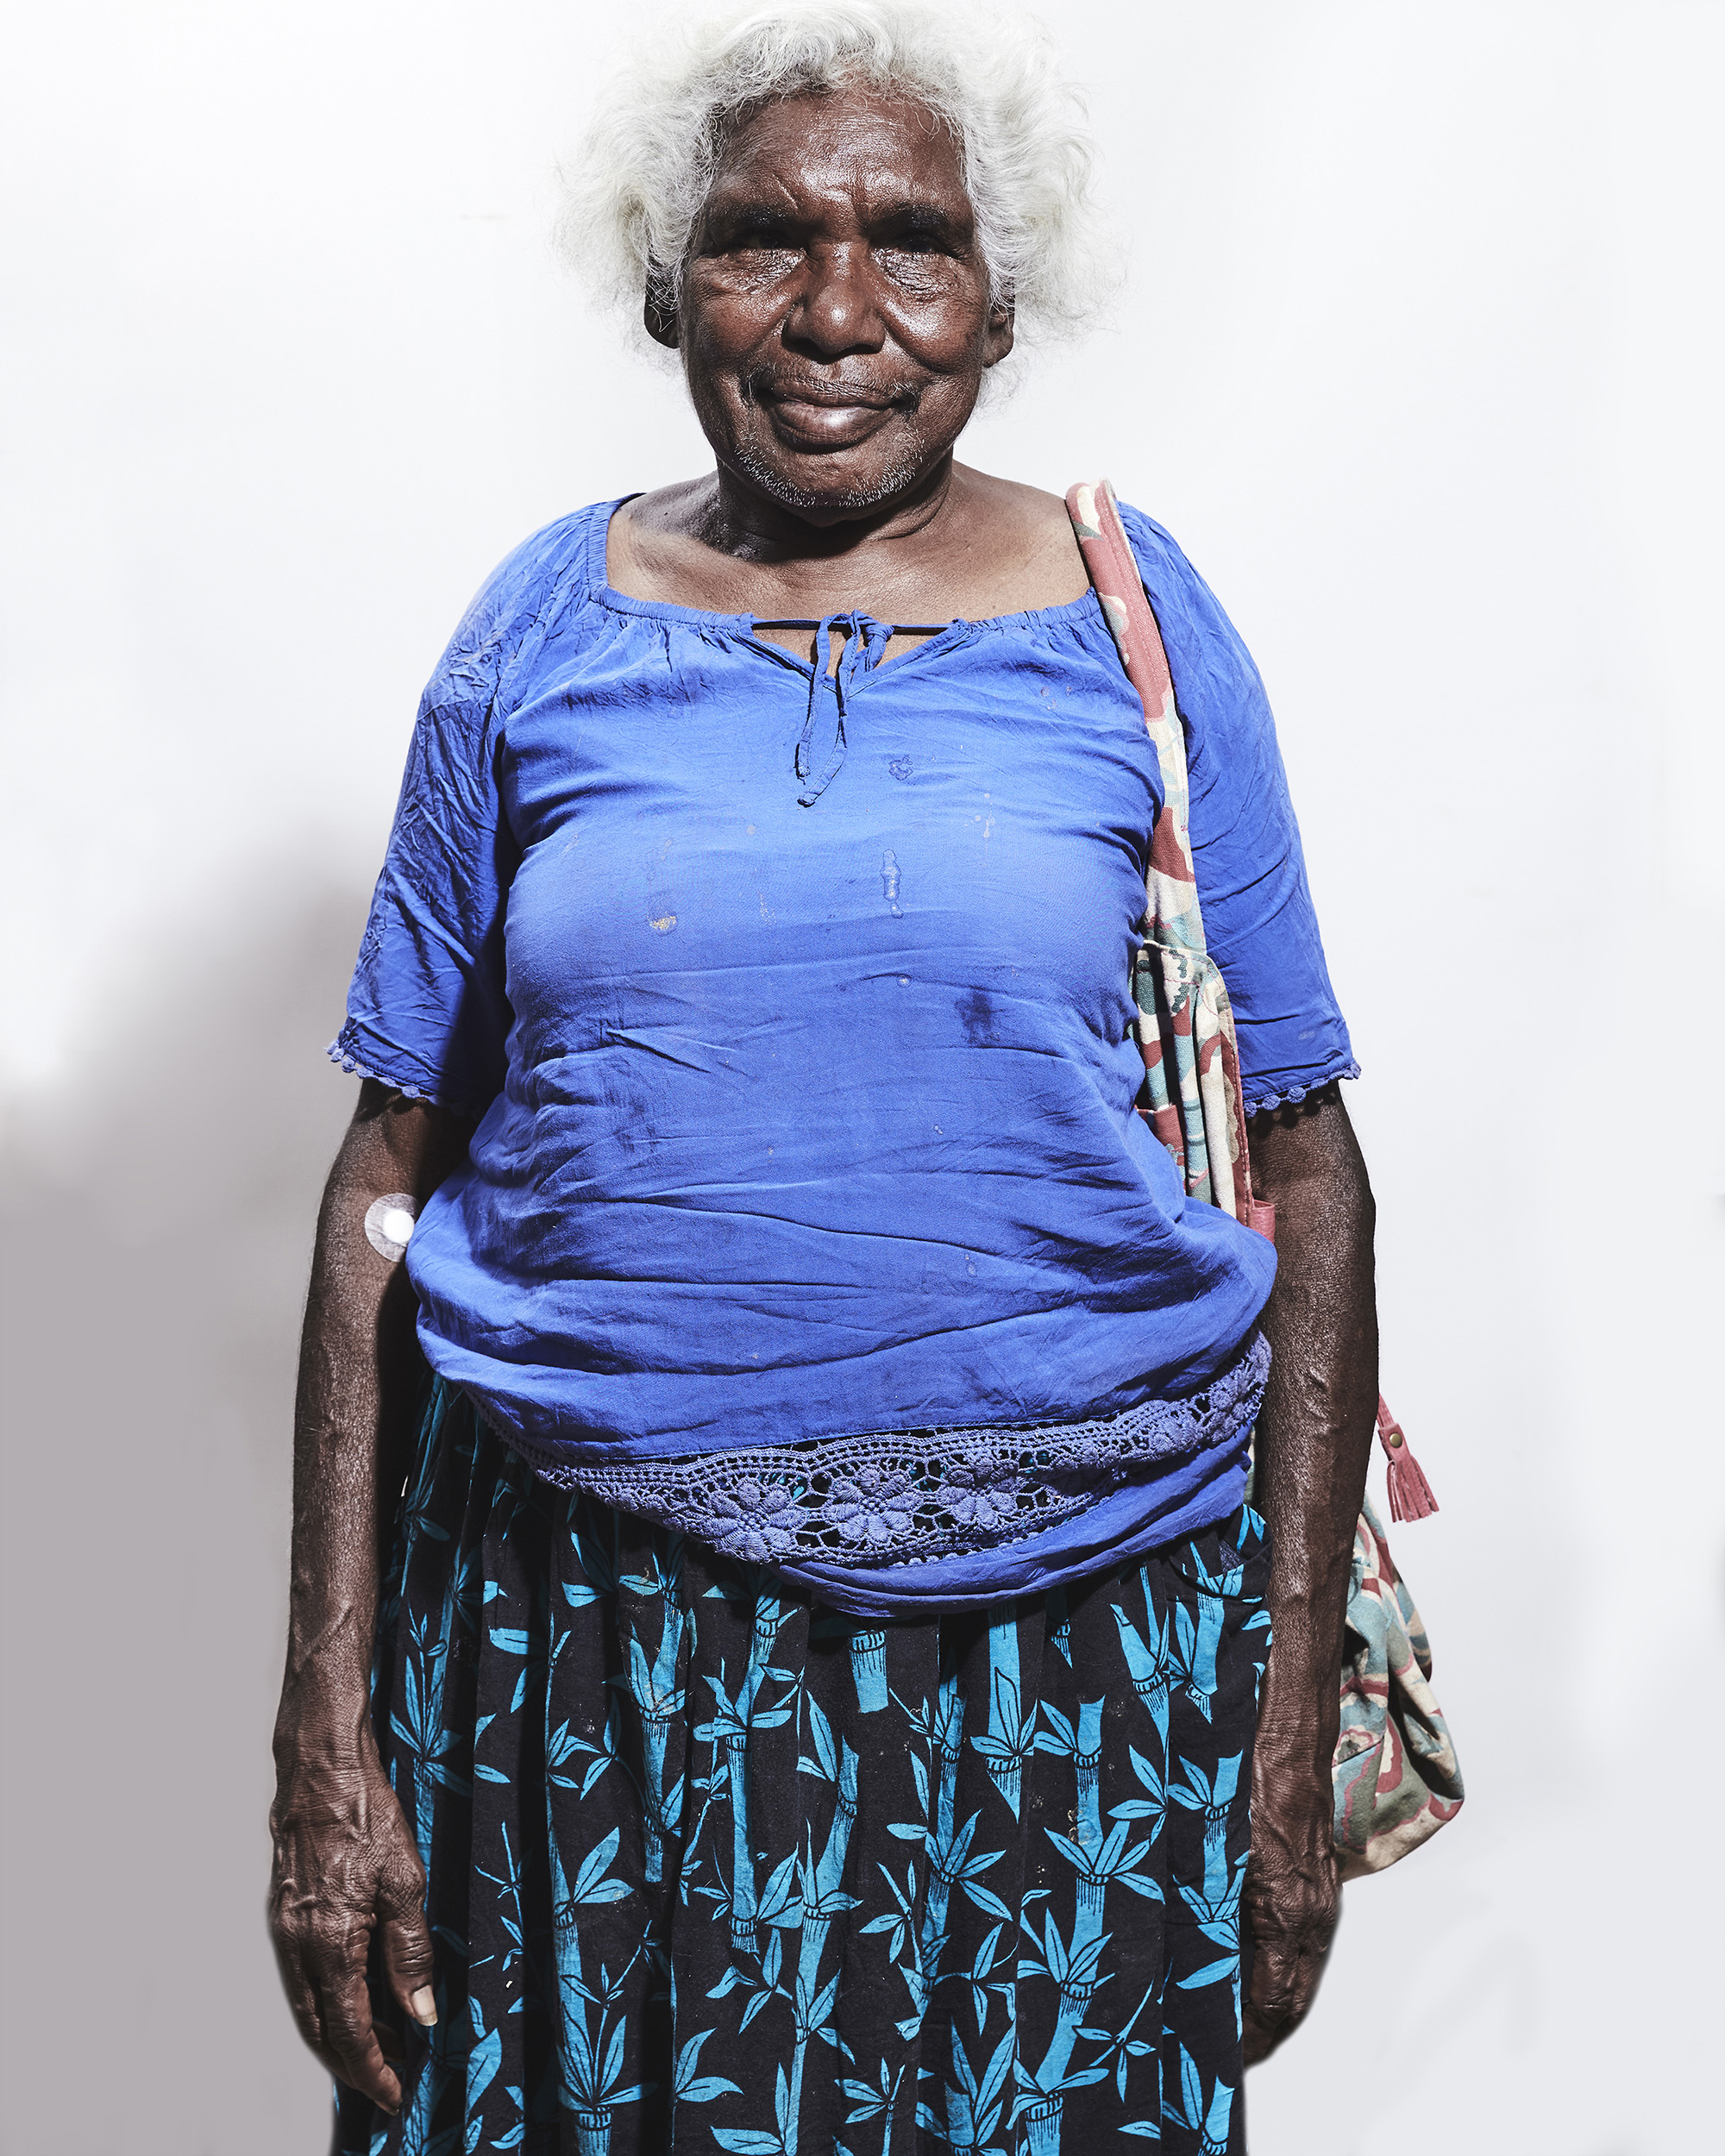 indigenous-artists-thom-rigney-professional-photographer-documentary-portrait-003